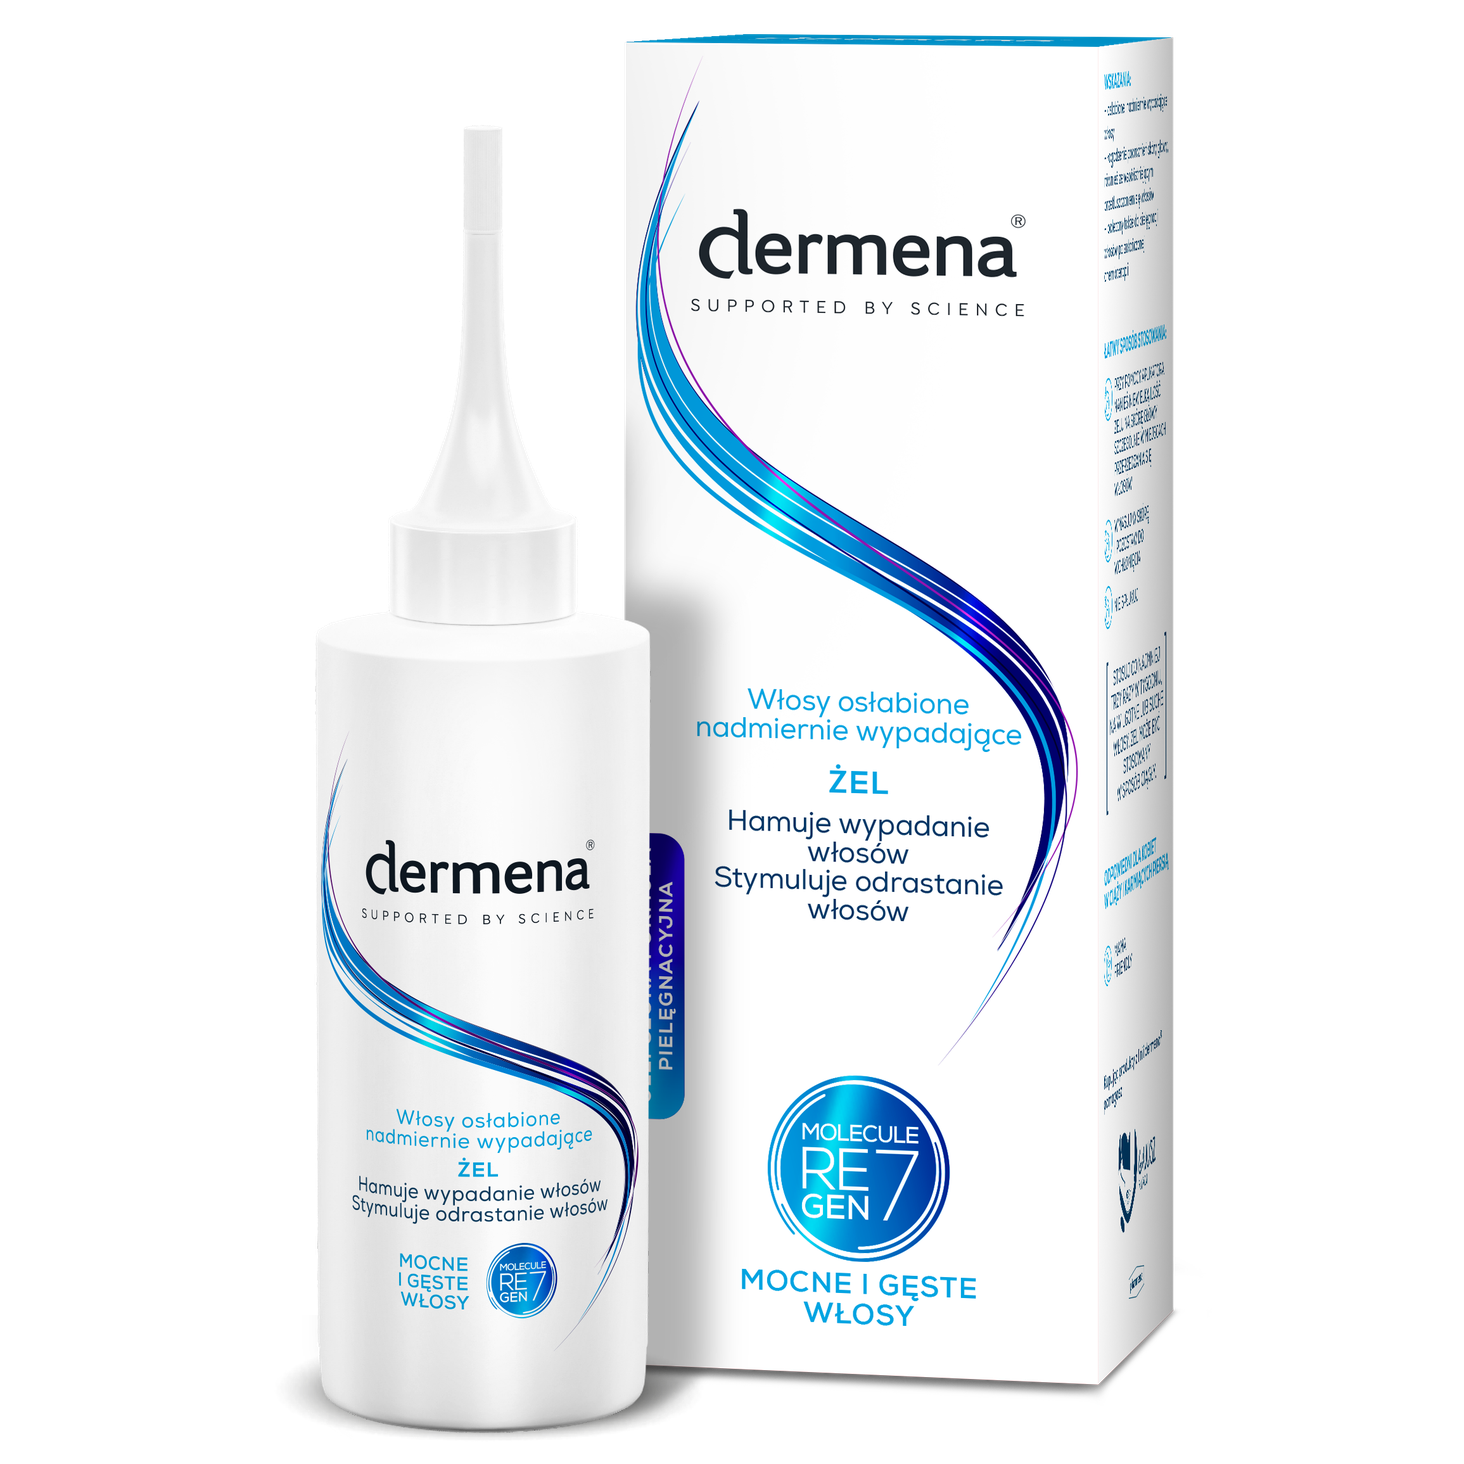 dermena szampon ceneo hair care